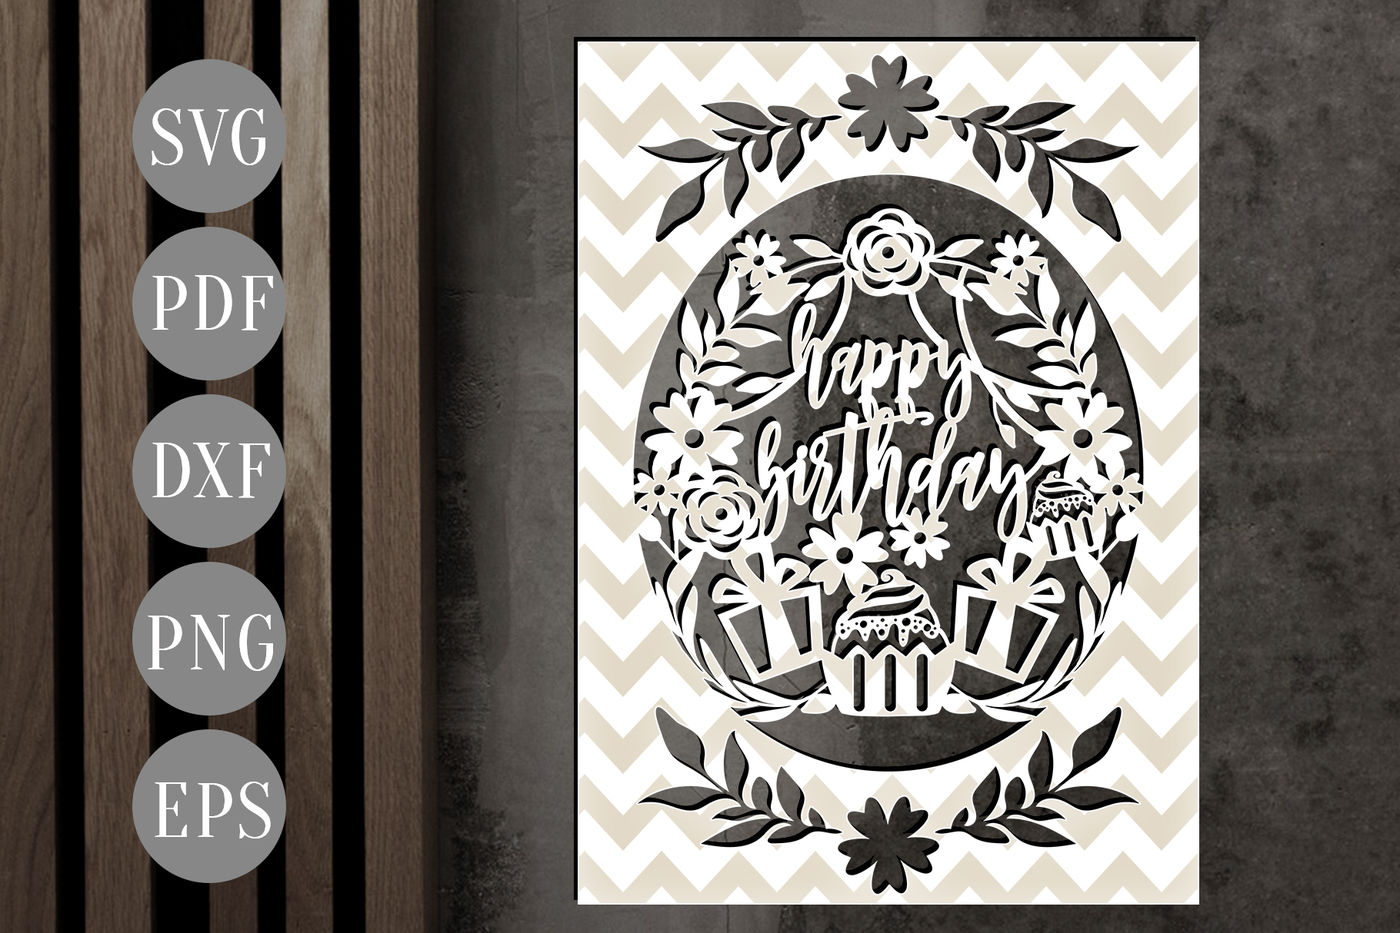 Download Cricut Explore Free Happy Birthday Card Svg Cutting Files